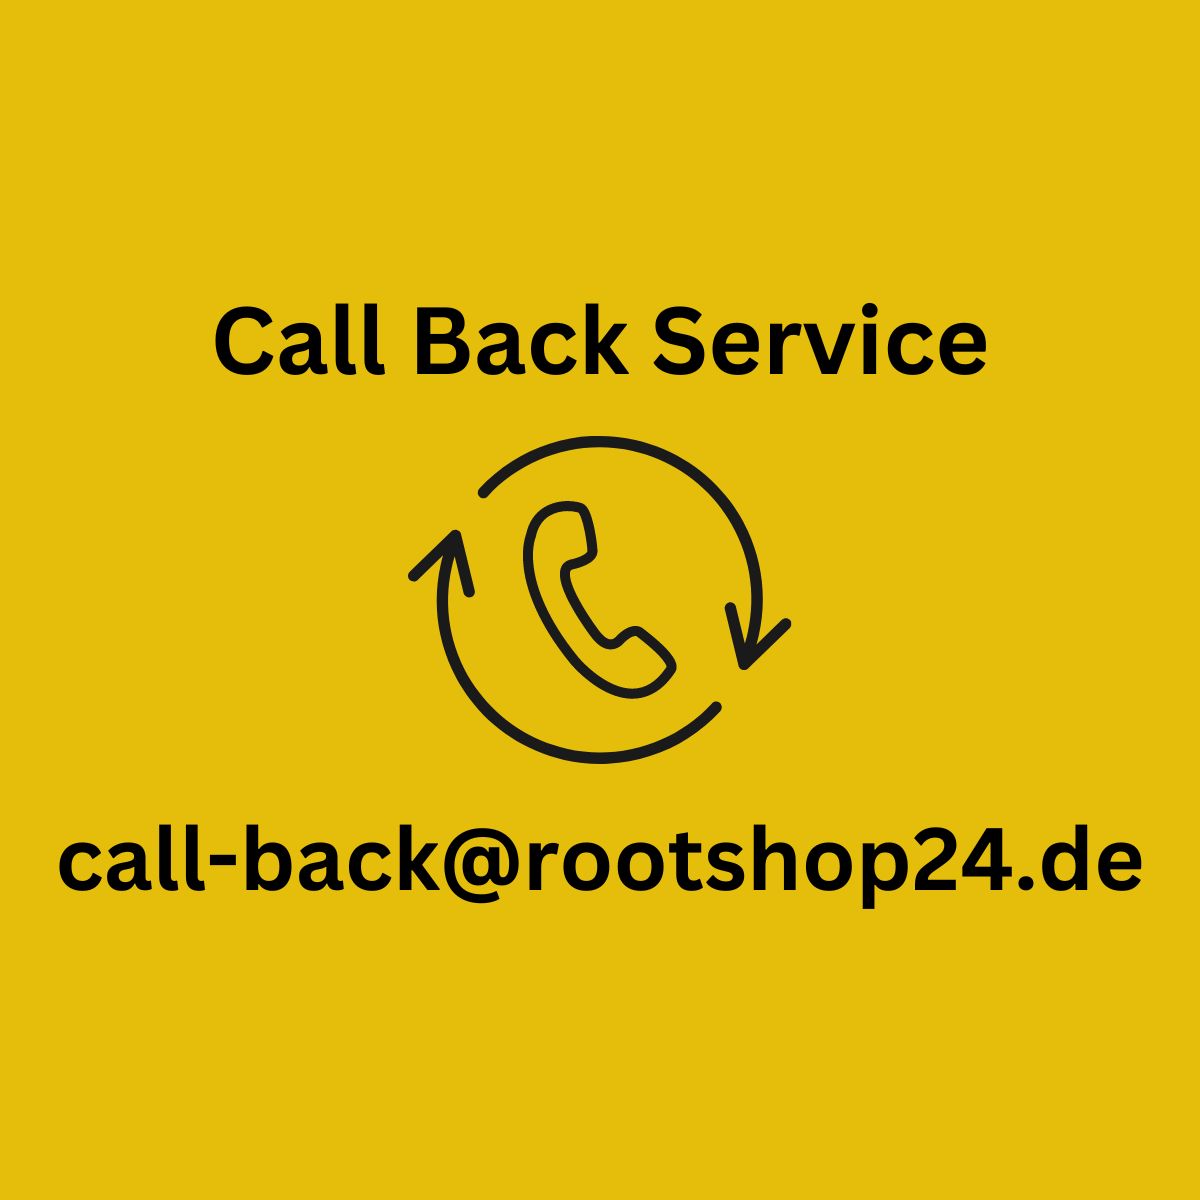 Call Back Service